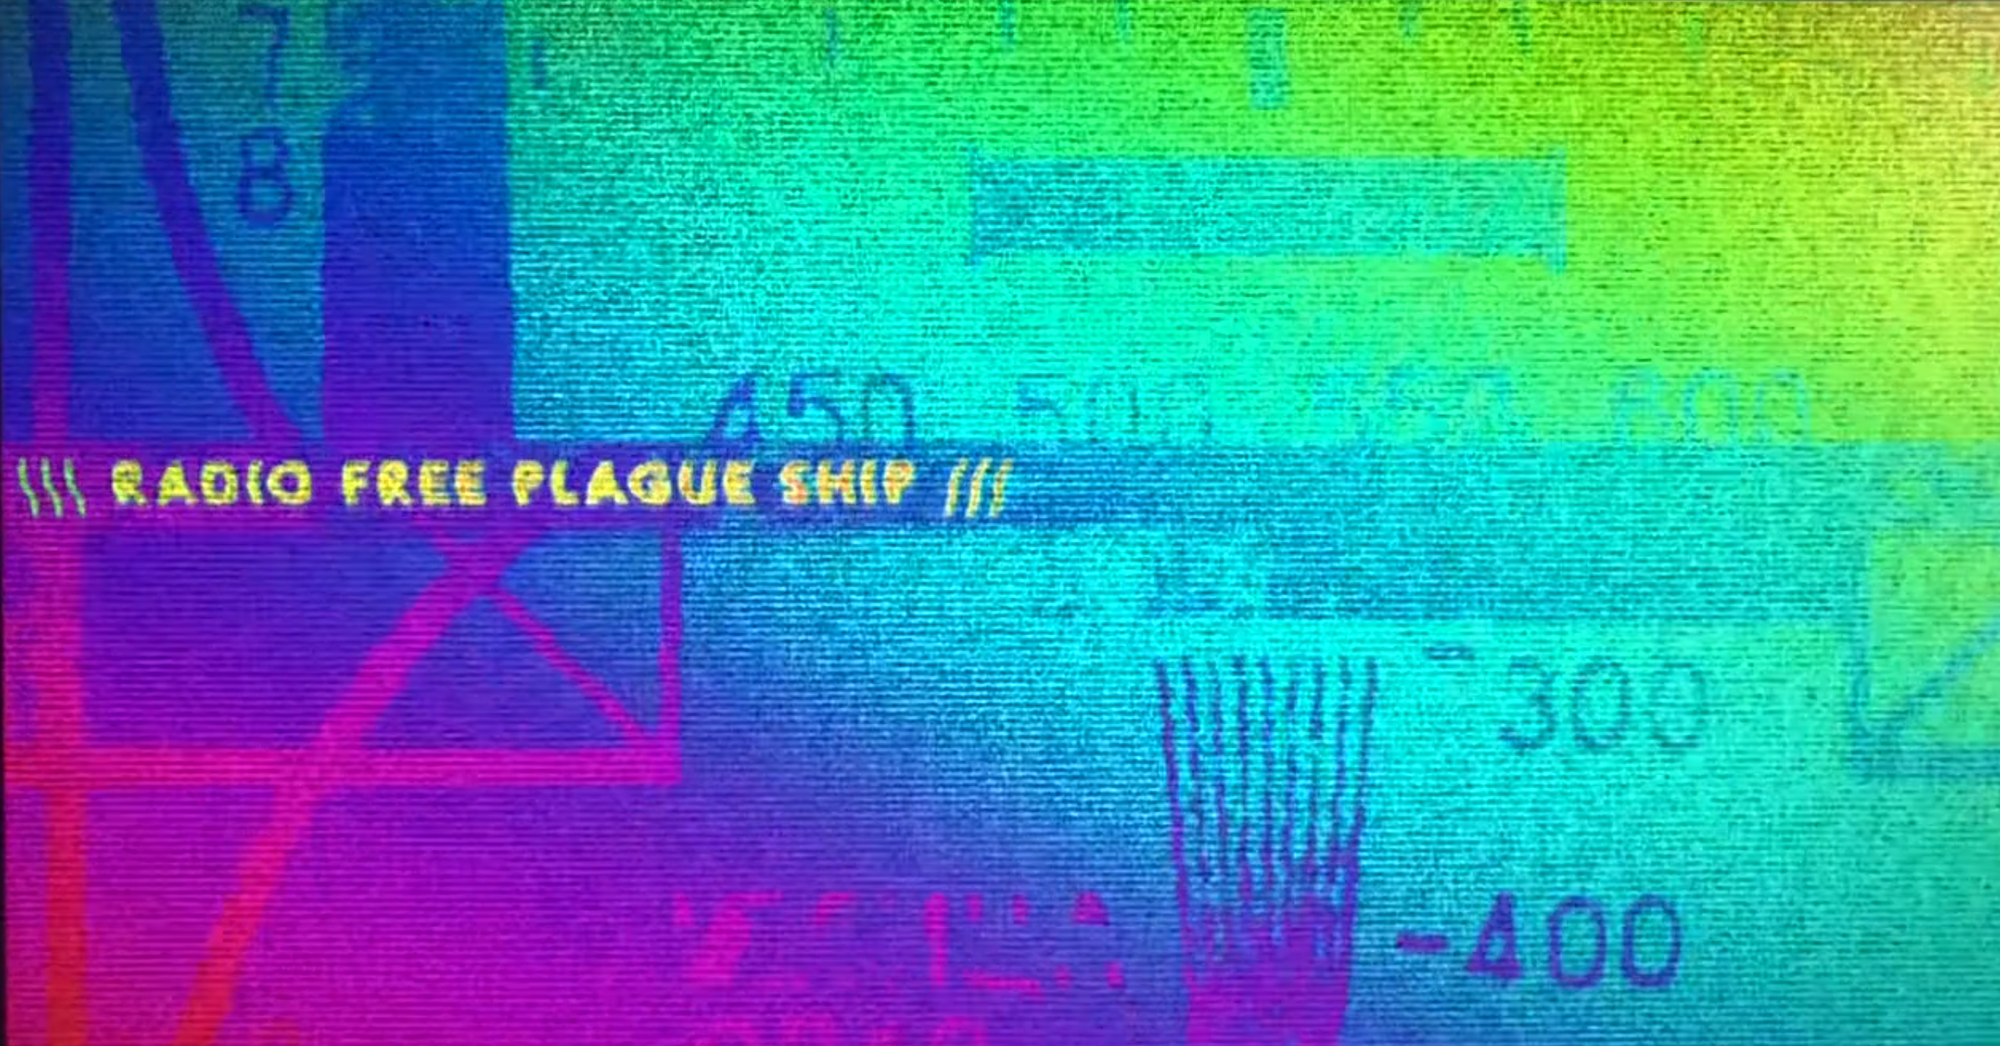 Radio Free Plague Ship